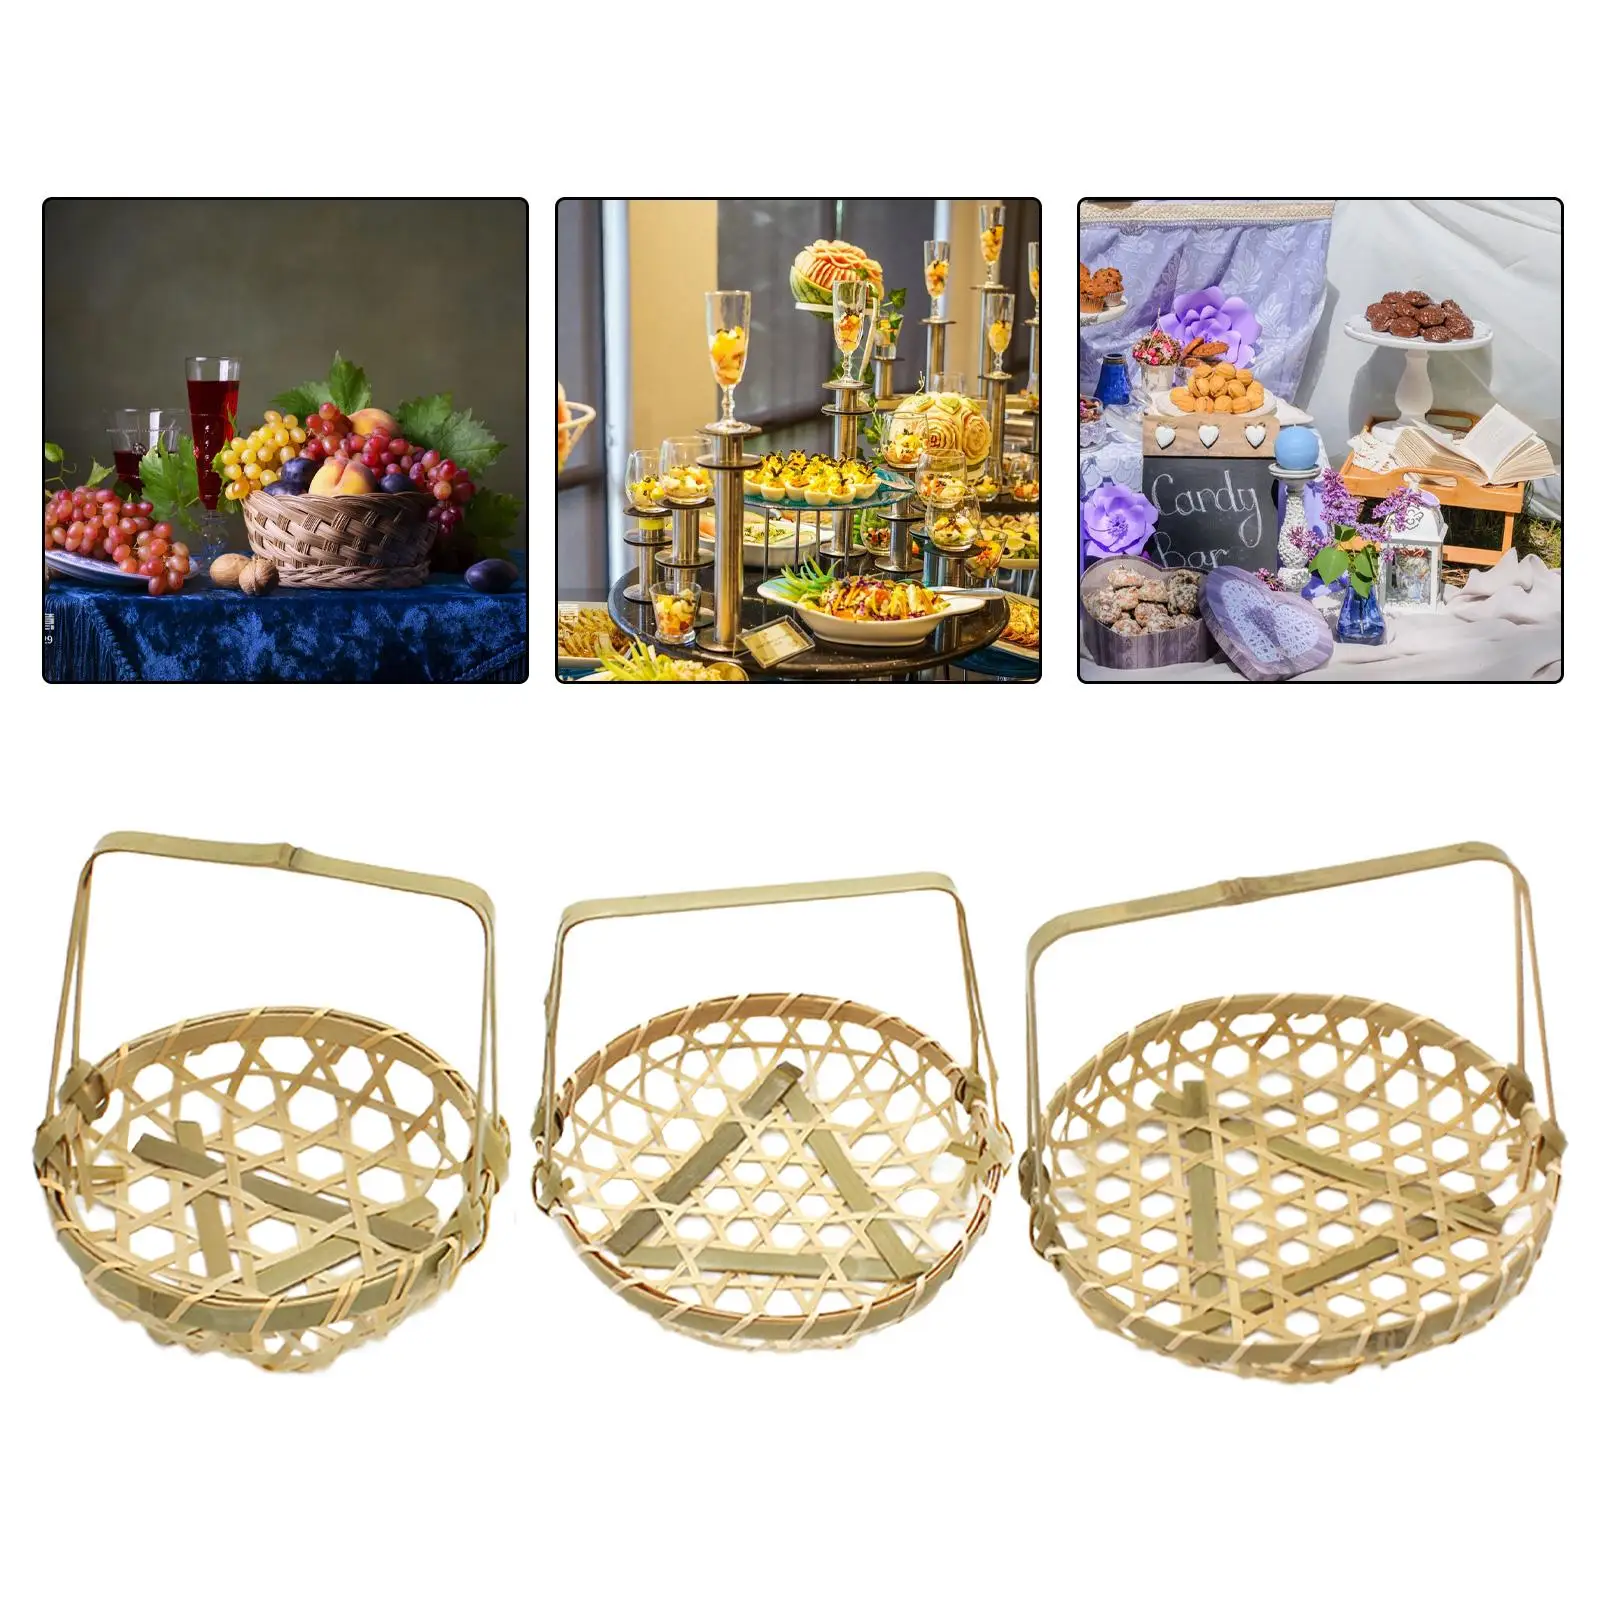 Bamboo Basket Elegant Flower Arrangement Shopping Basket Flower Basket Woven Basket for Living Room Party Banquet Bedroom Picnic